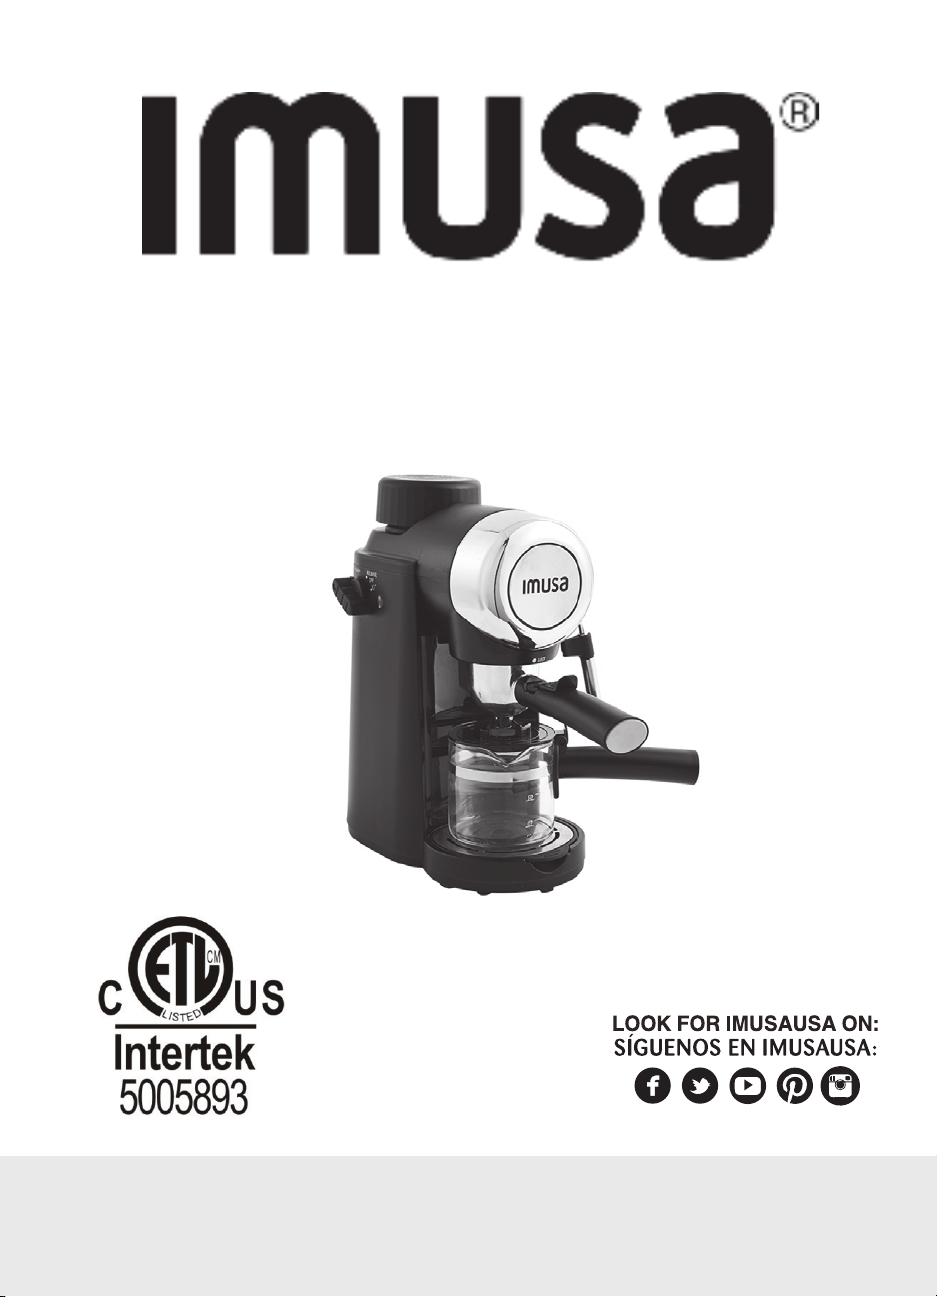 IMUSA GAU-18202 4-Cup 800 Watt Electric Espresso Maker